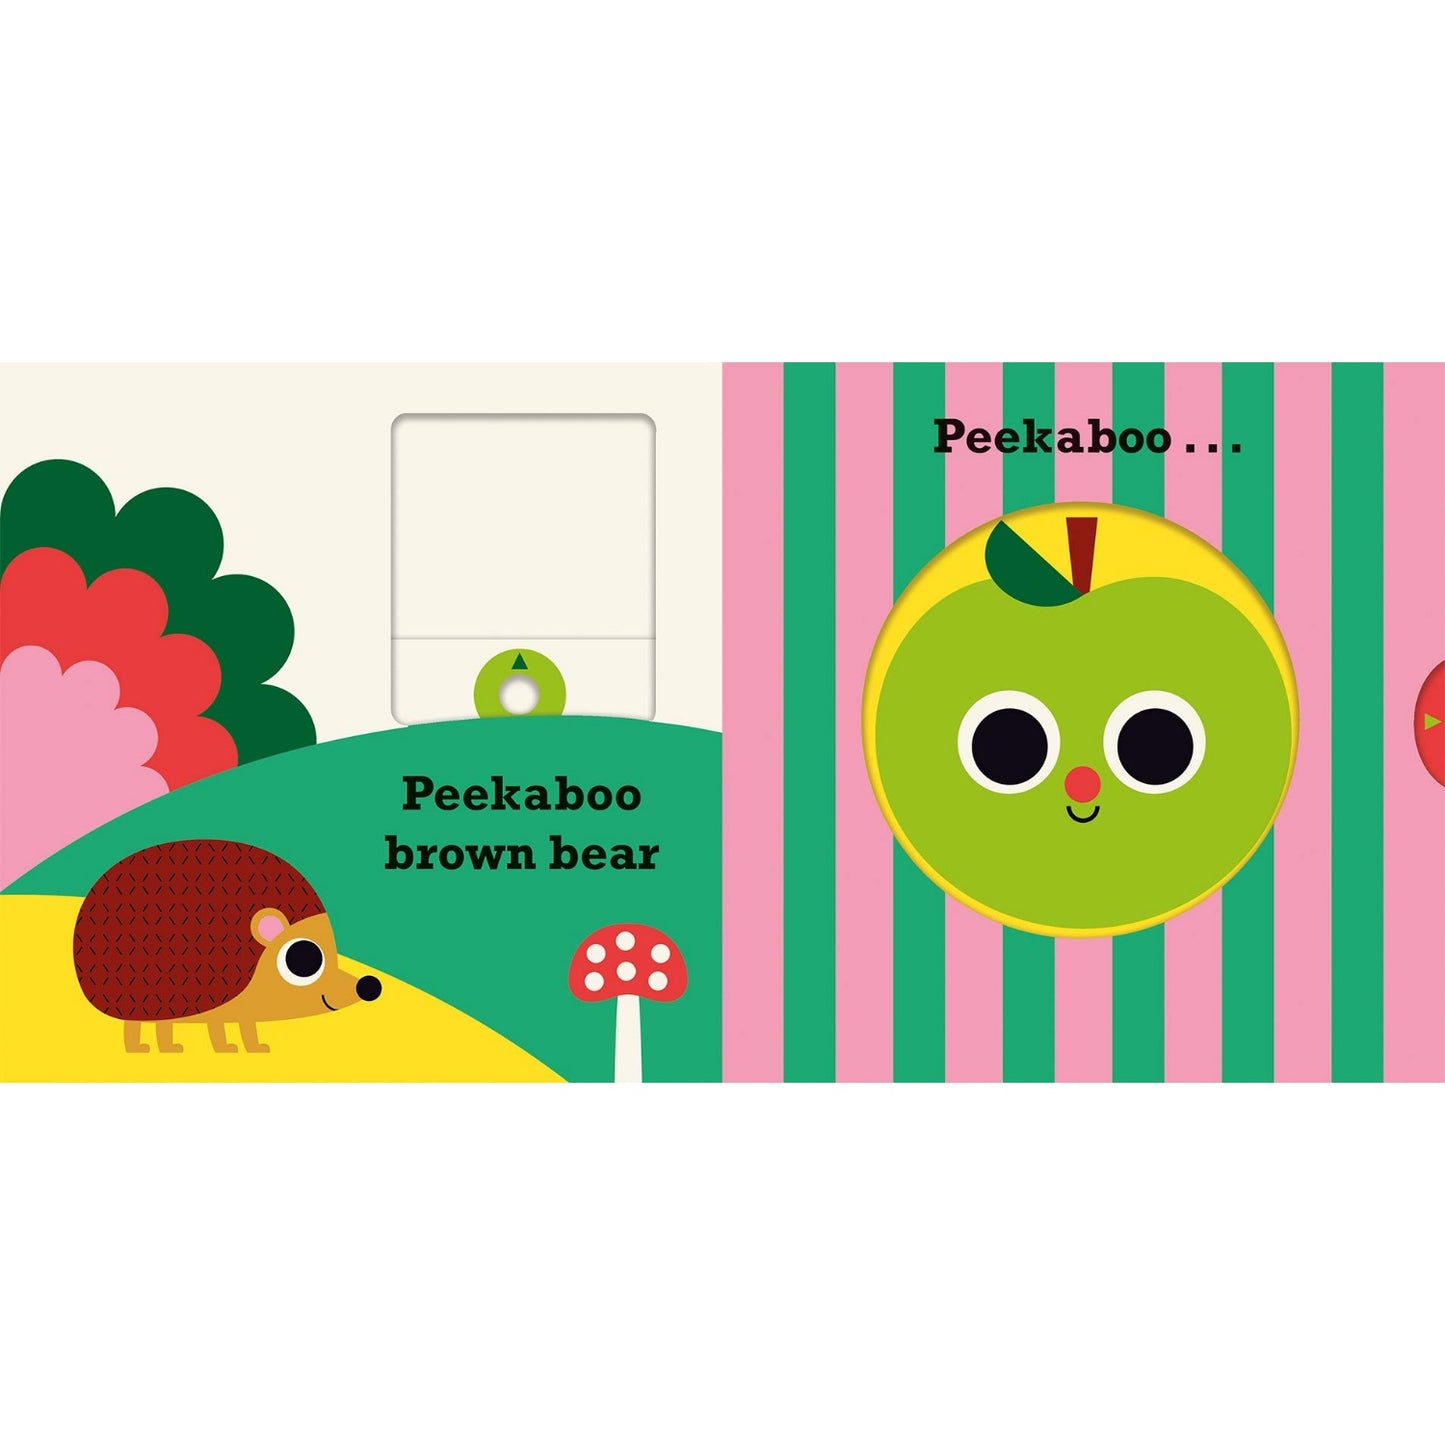 Peekaboo Bear | Interactive Board Book for Babies & Toddlers